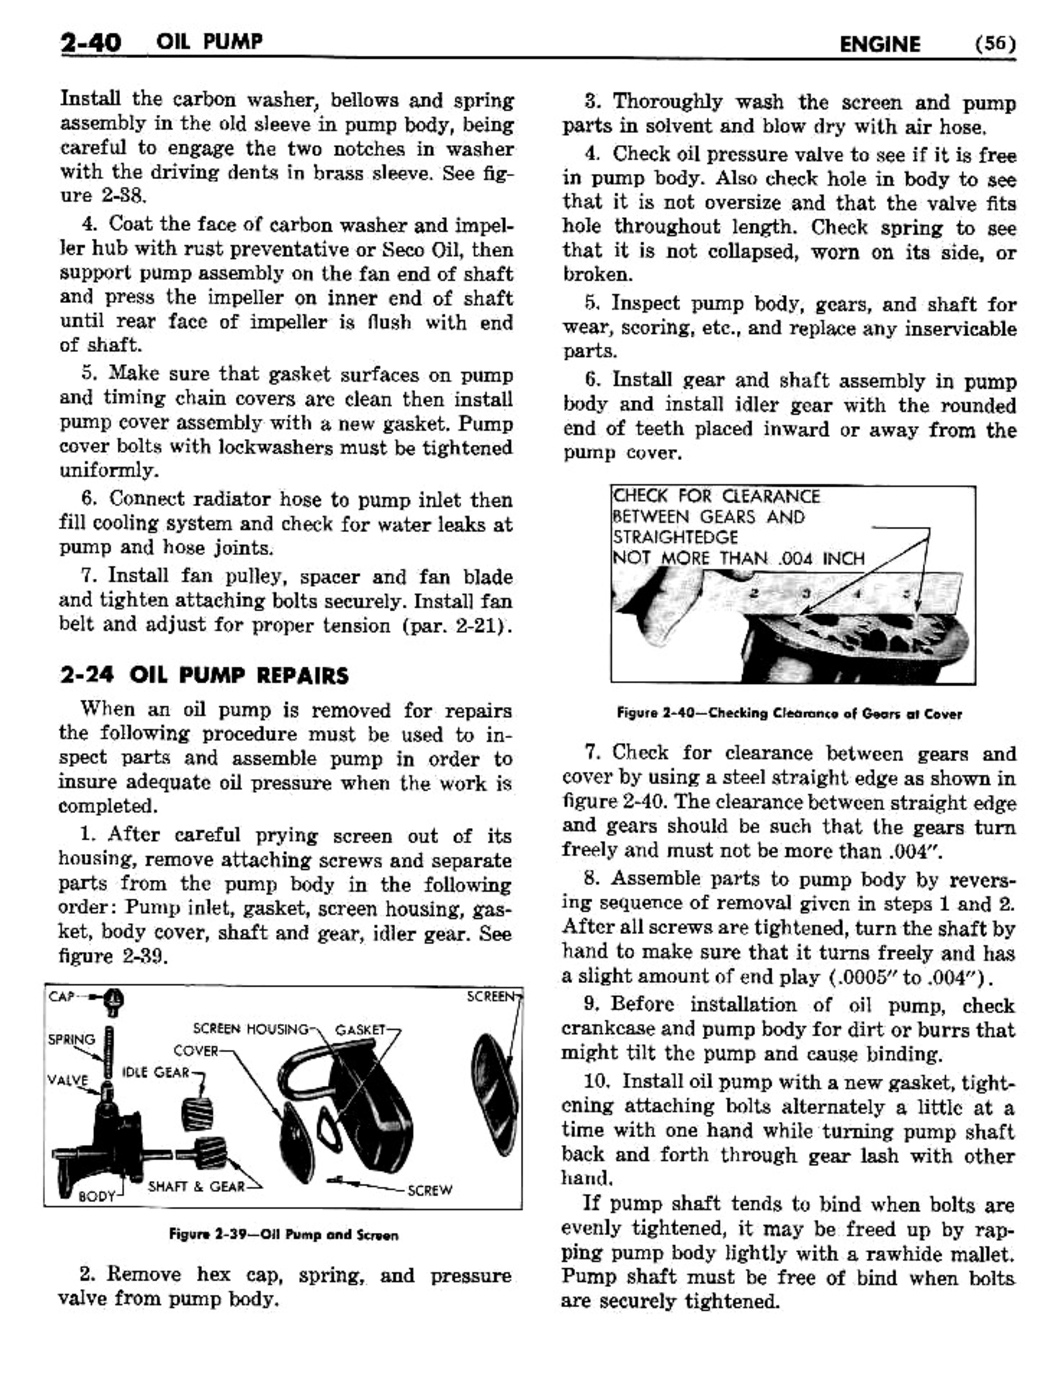 n_03 1954 Buick Shop Manual - Engine-040-040.jpg